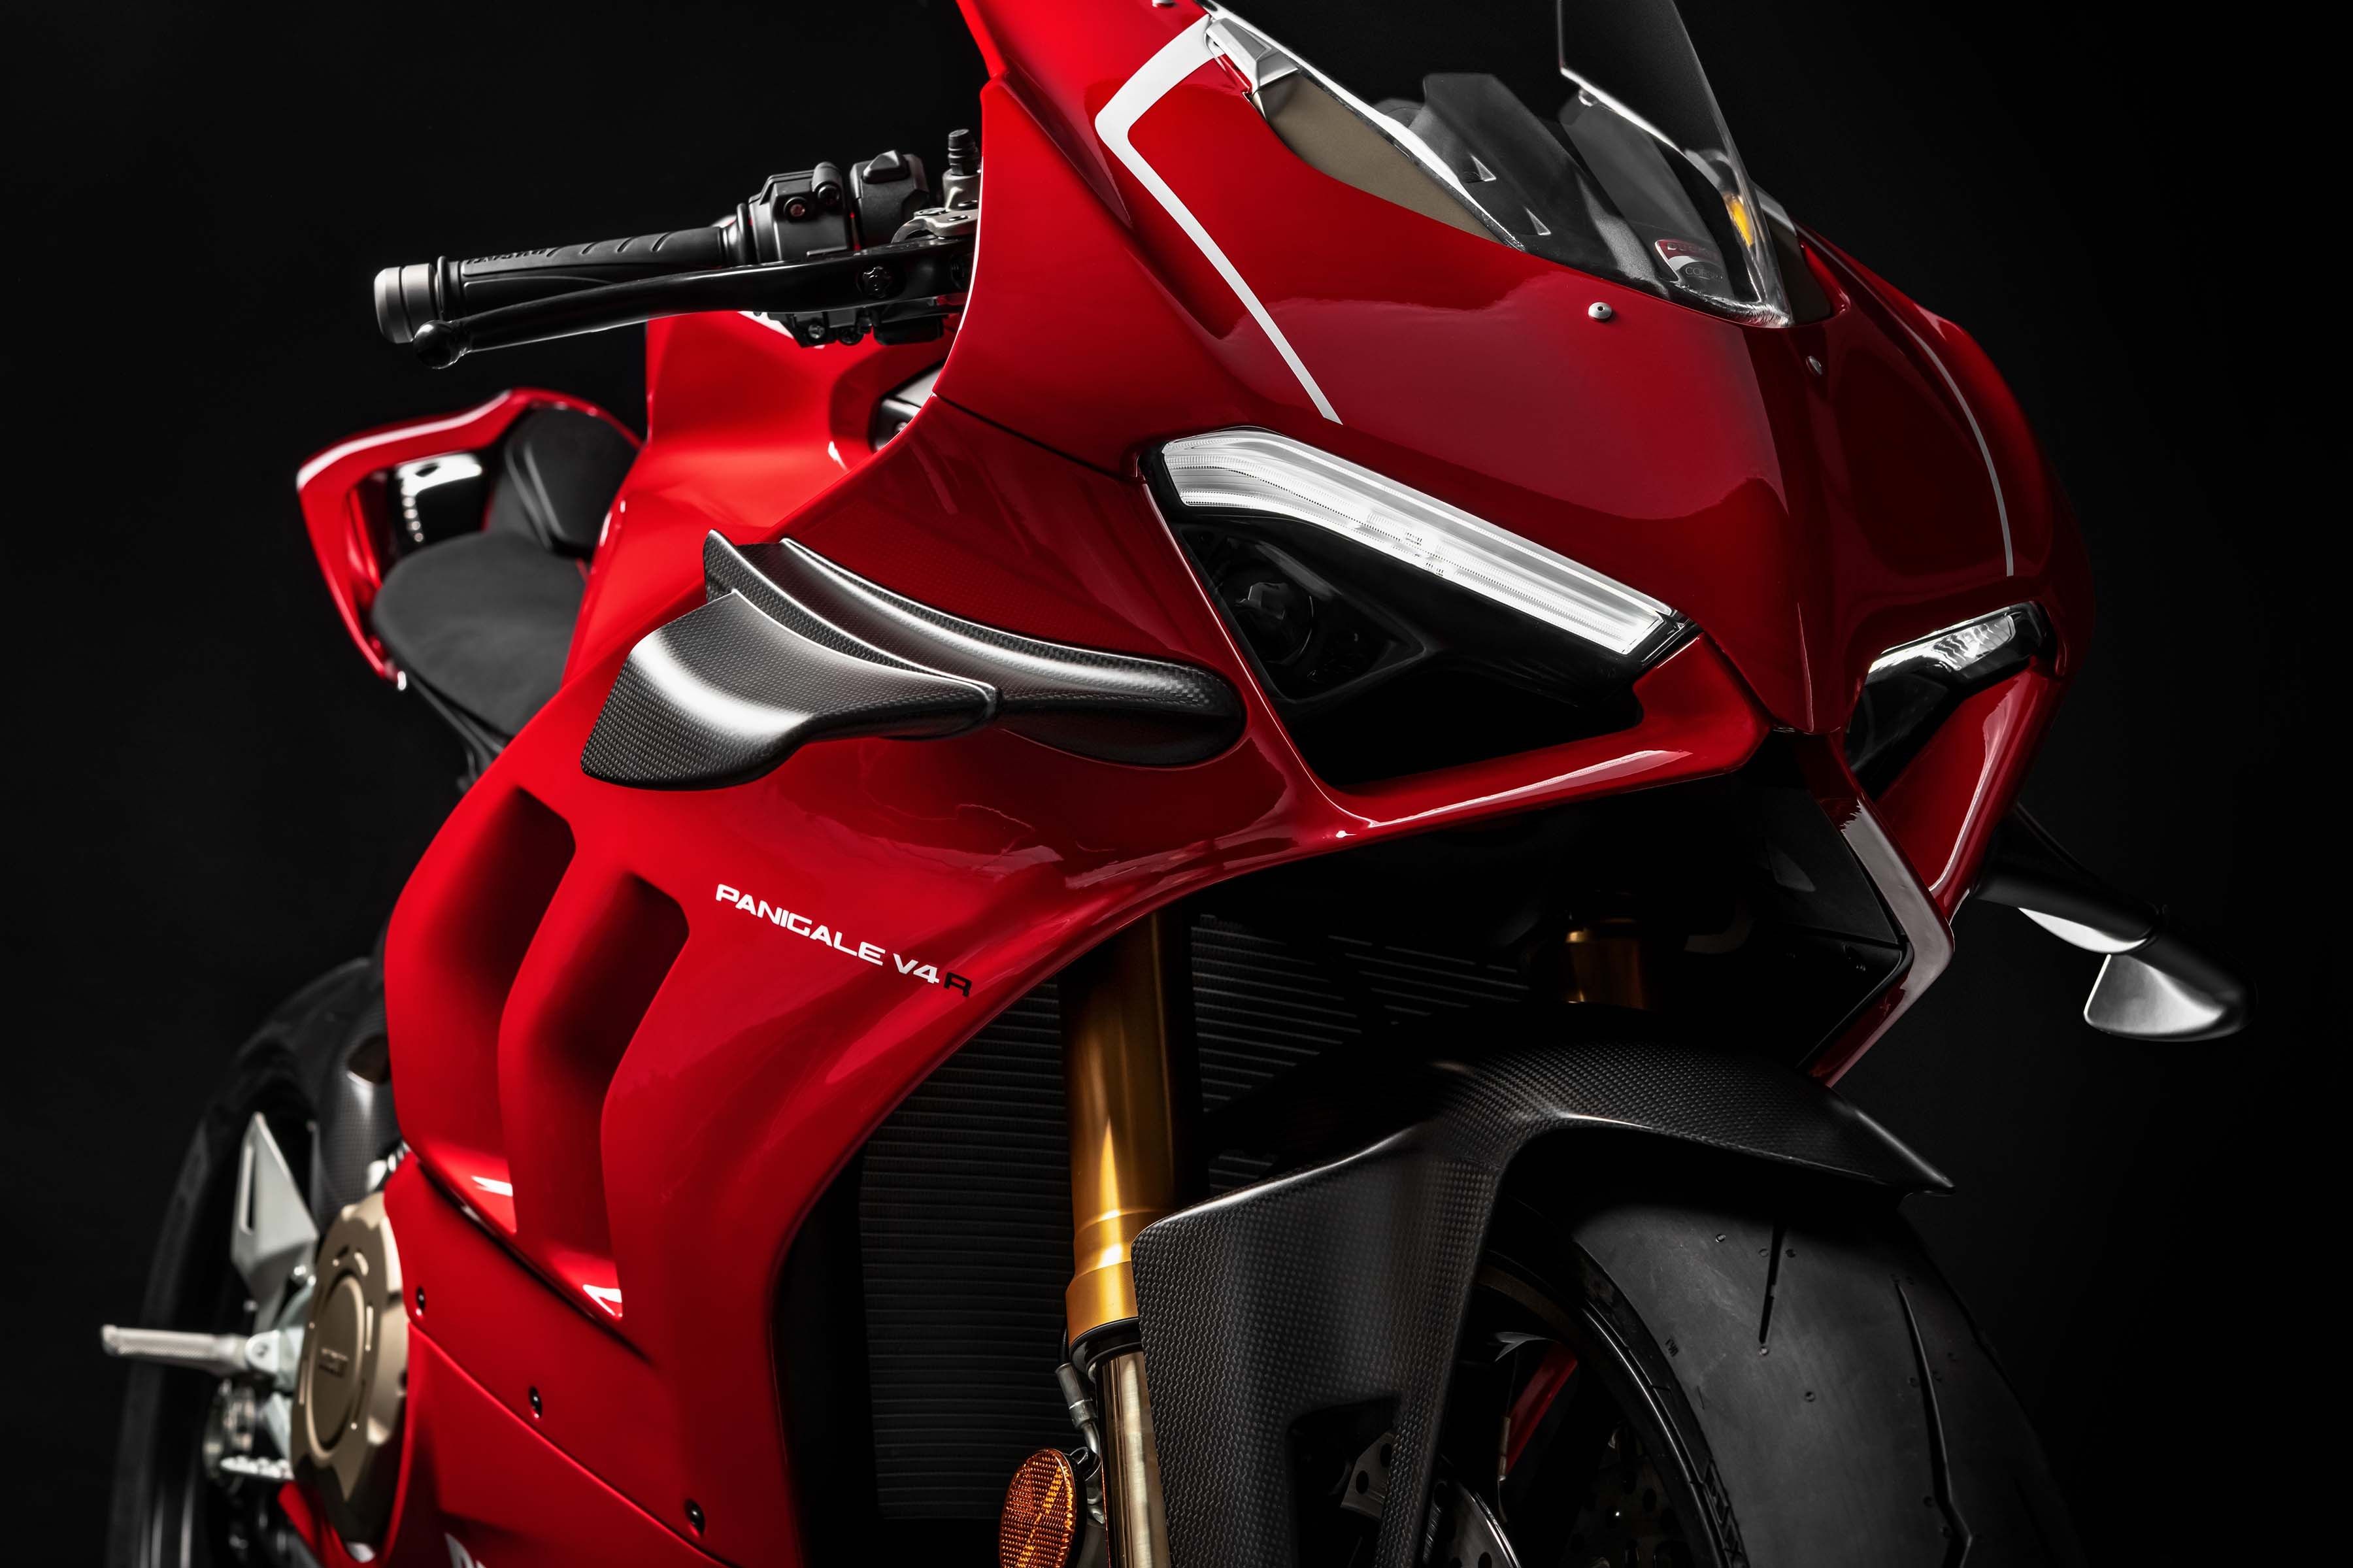 Ducati Panigale V4 Superleggera specs leaked